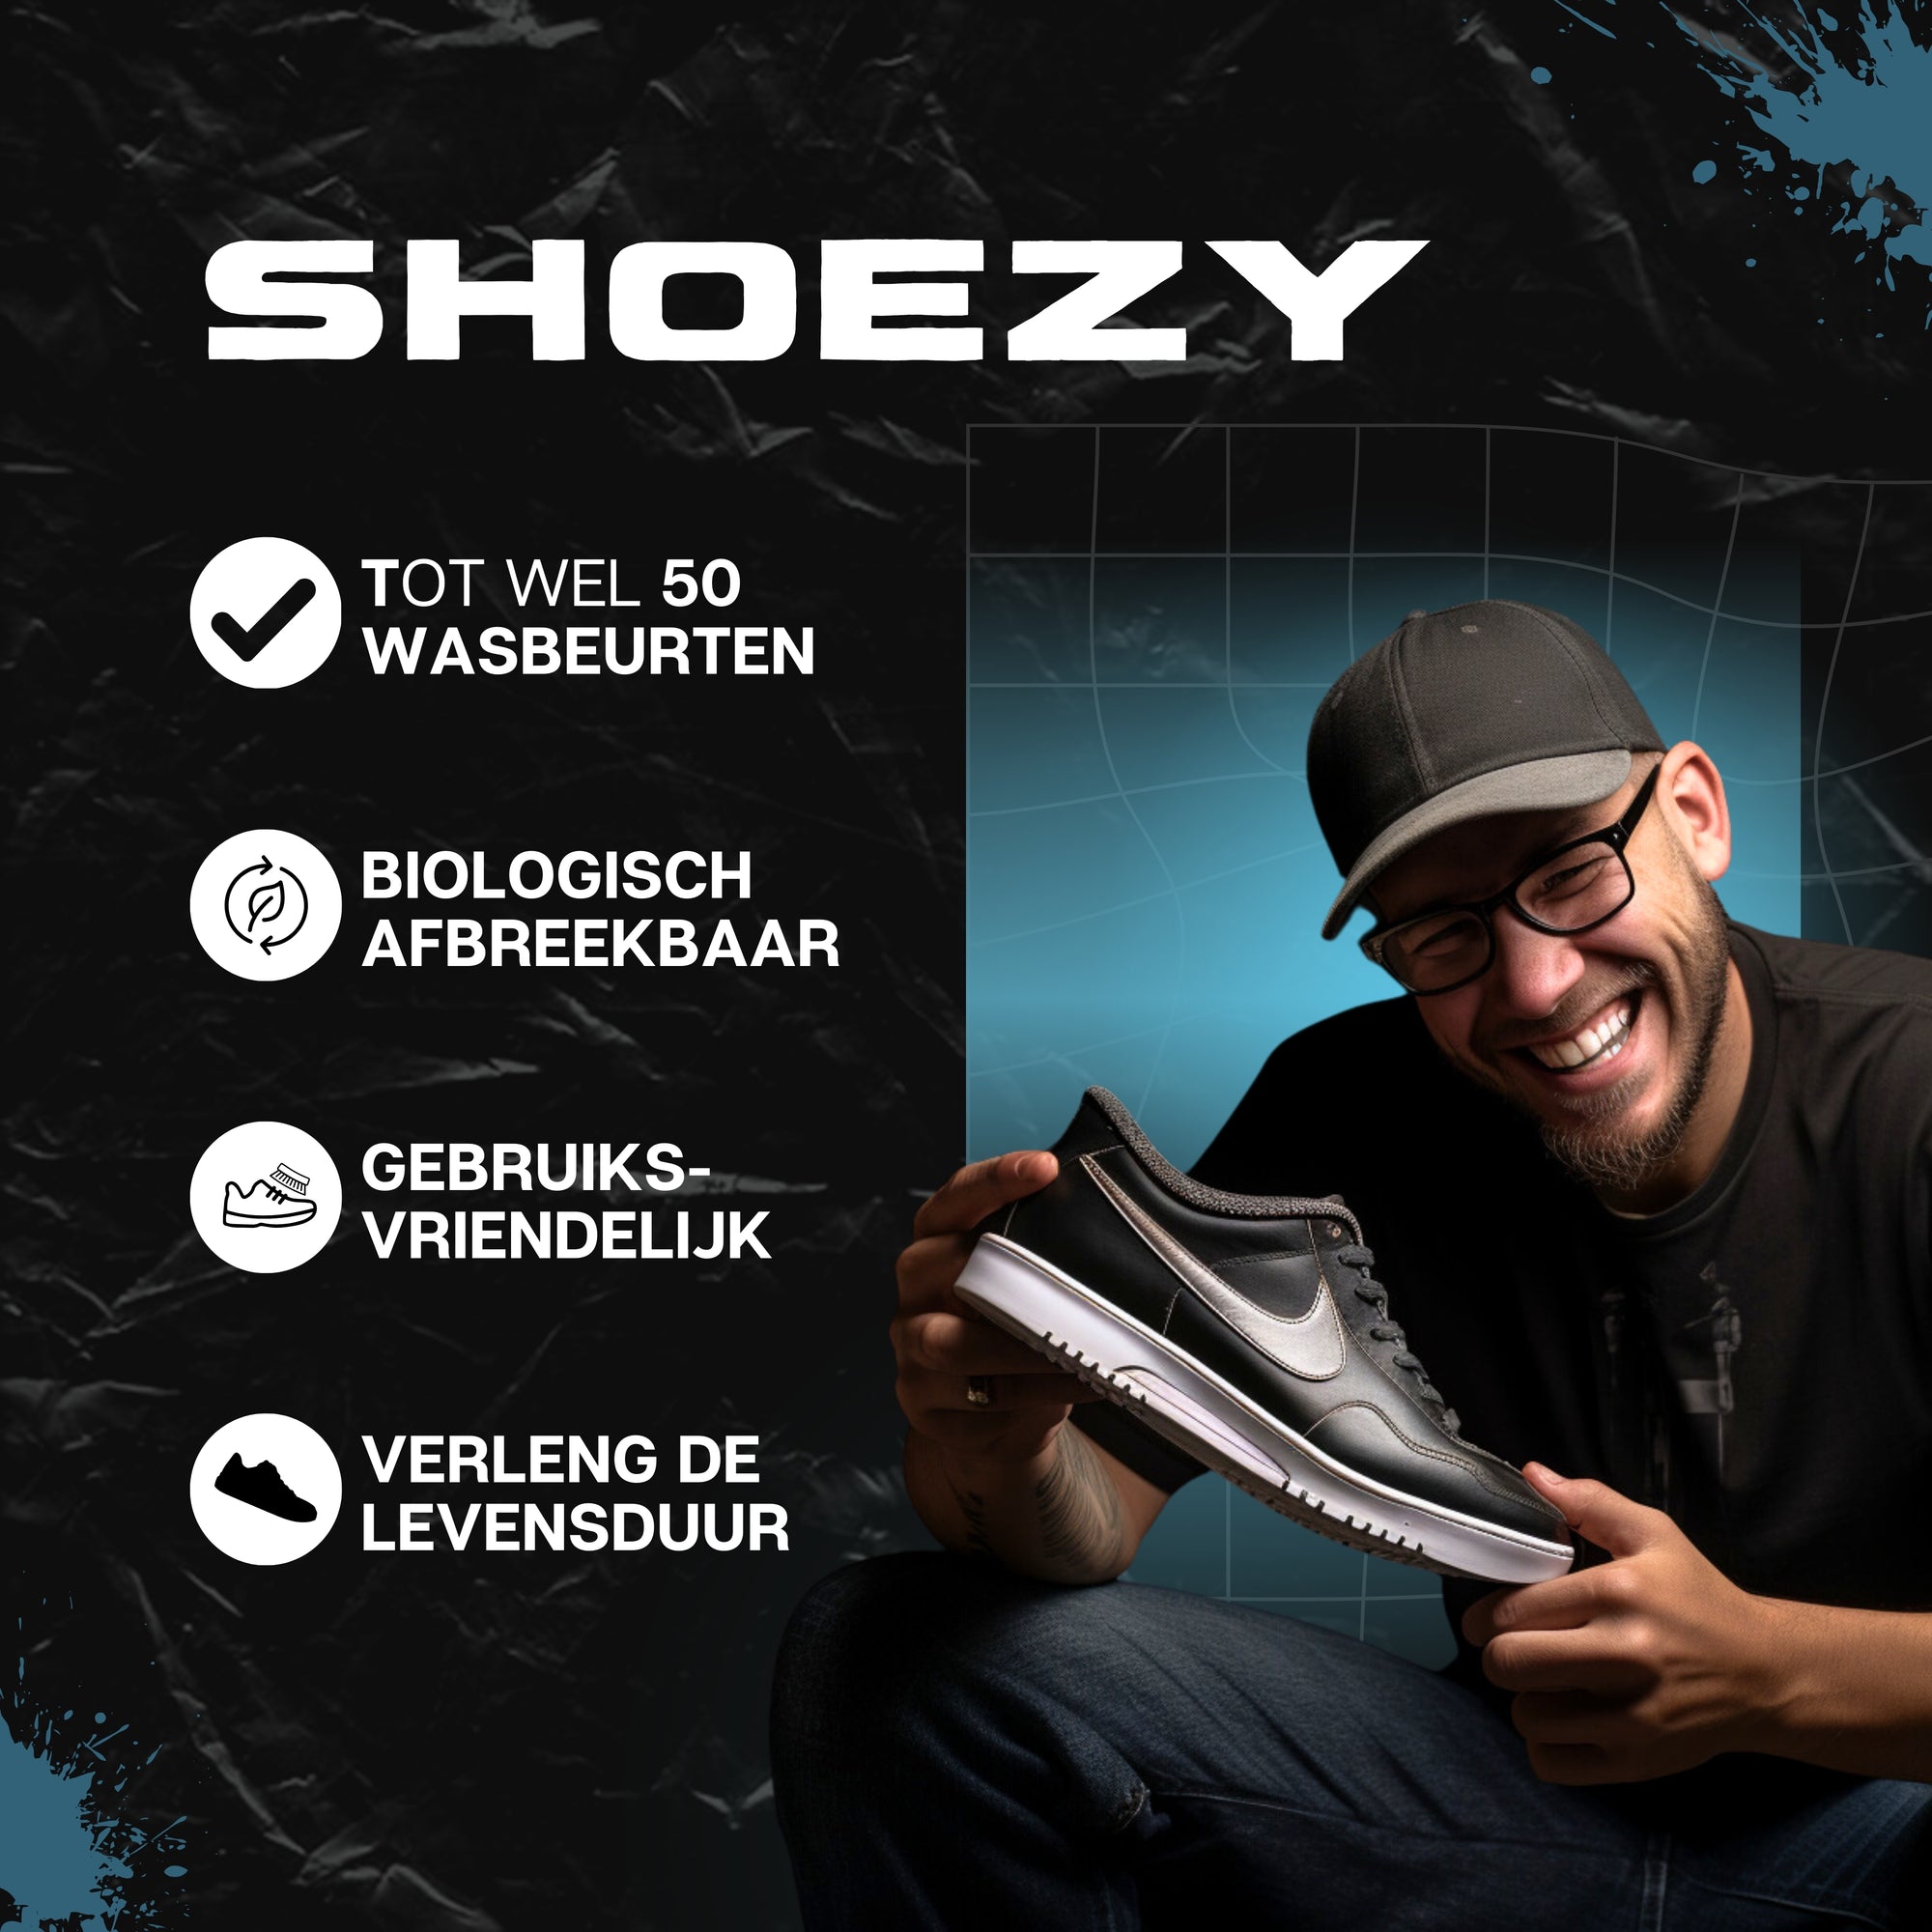 Shoezy | Sneaker Cleaner